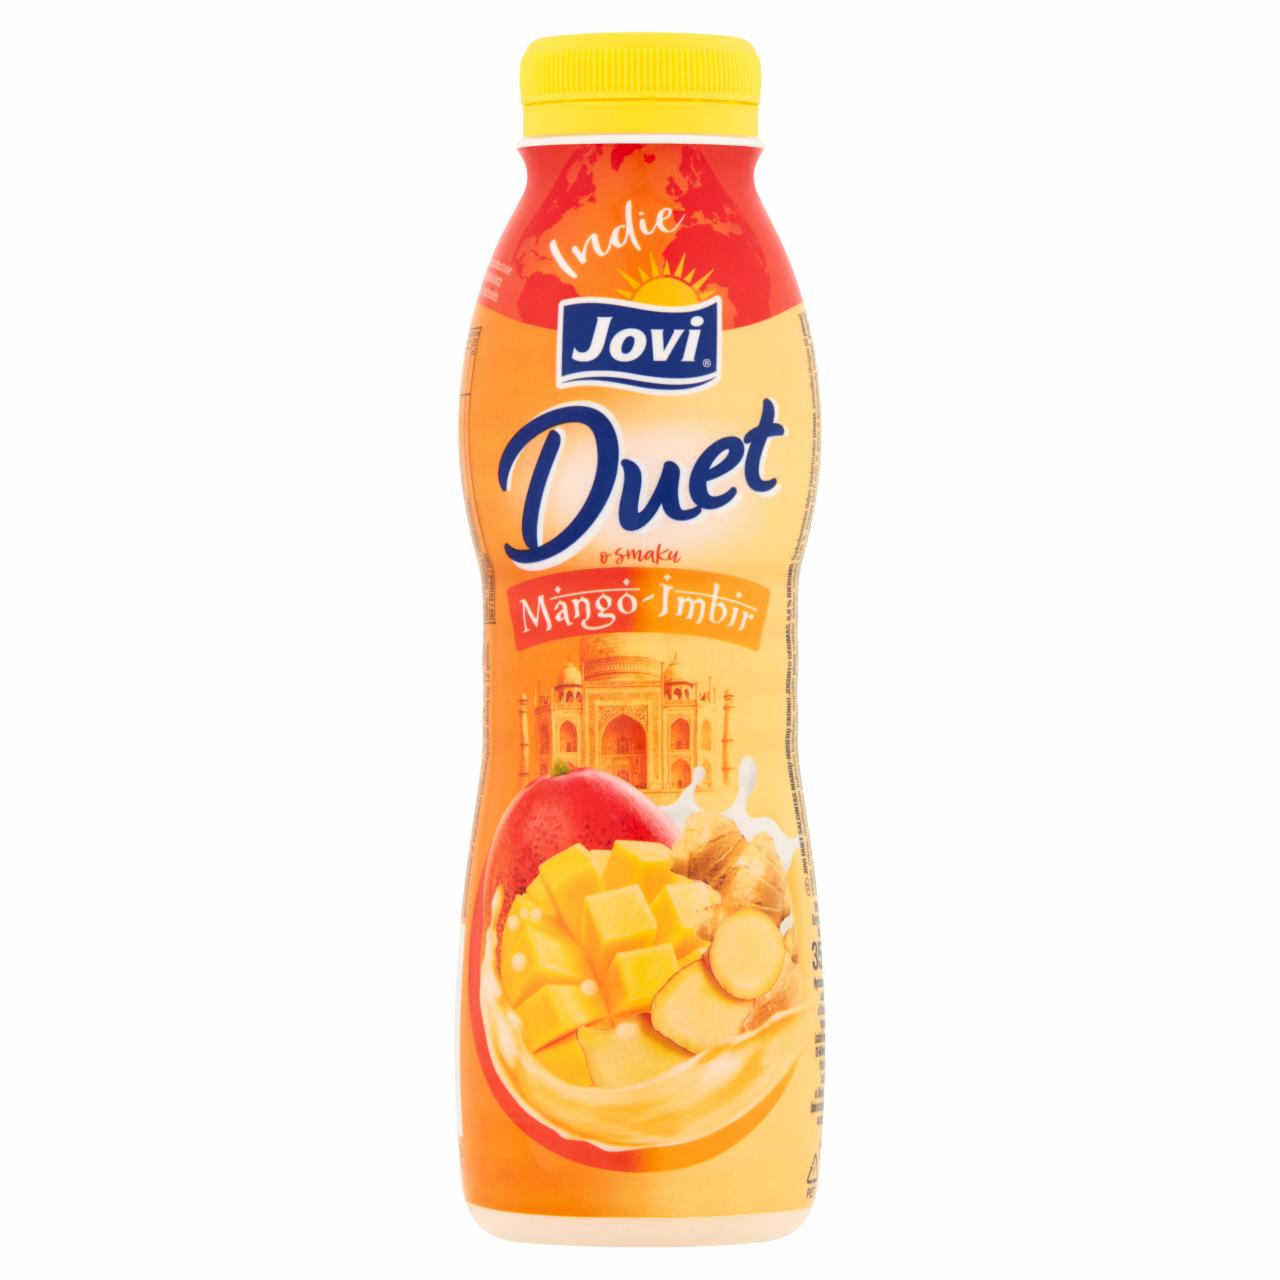 Zdjęcia - Jovi Duet Napój jogurtowy o smaku mango-imbir 350 g